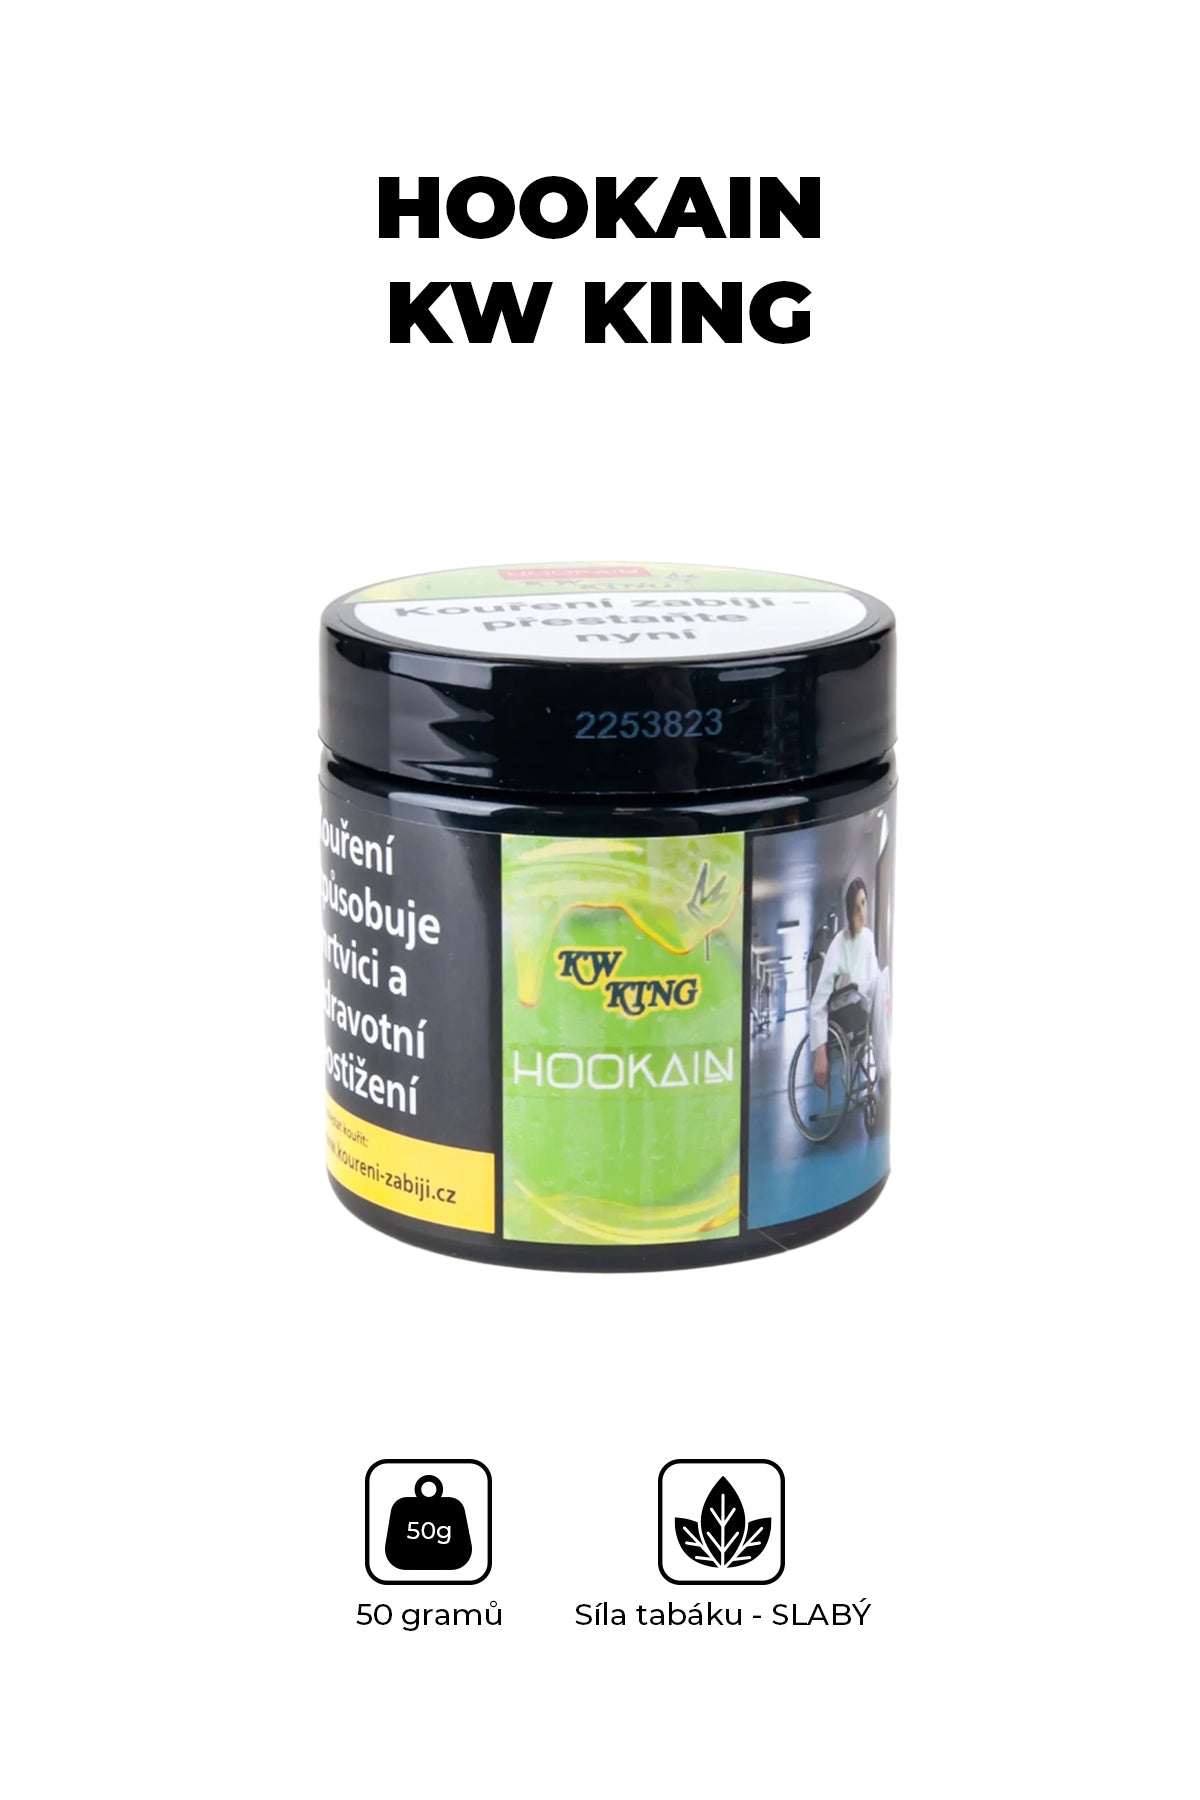 Tabák - Hookain 50g - Kw King